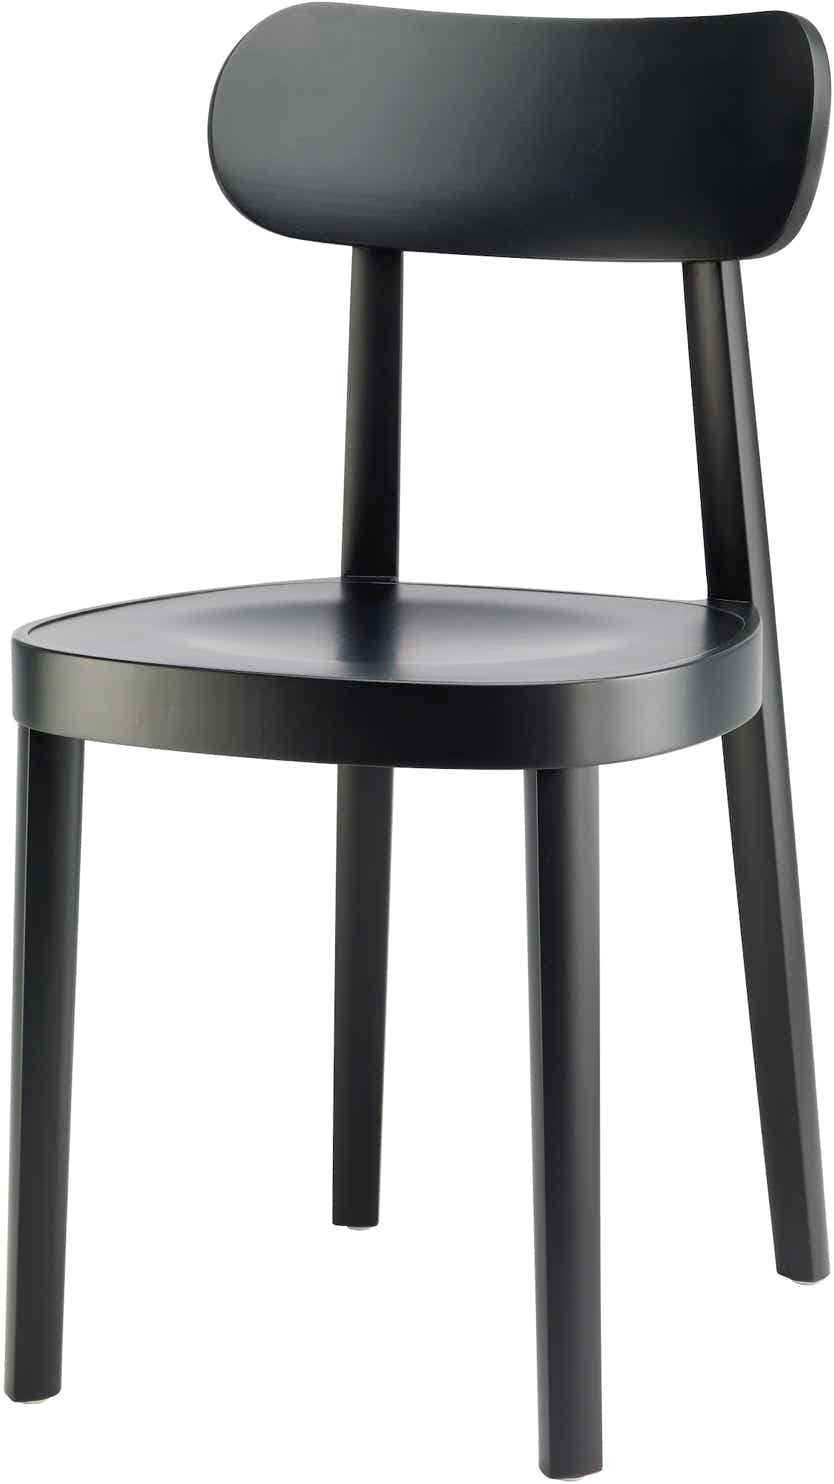 118 M / 118 MF Chair Black